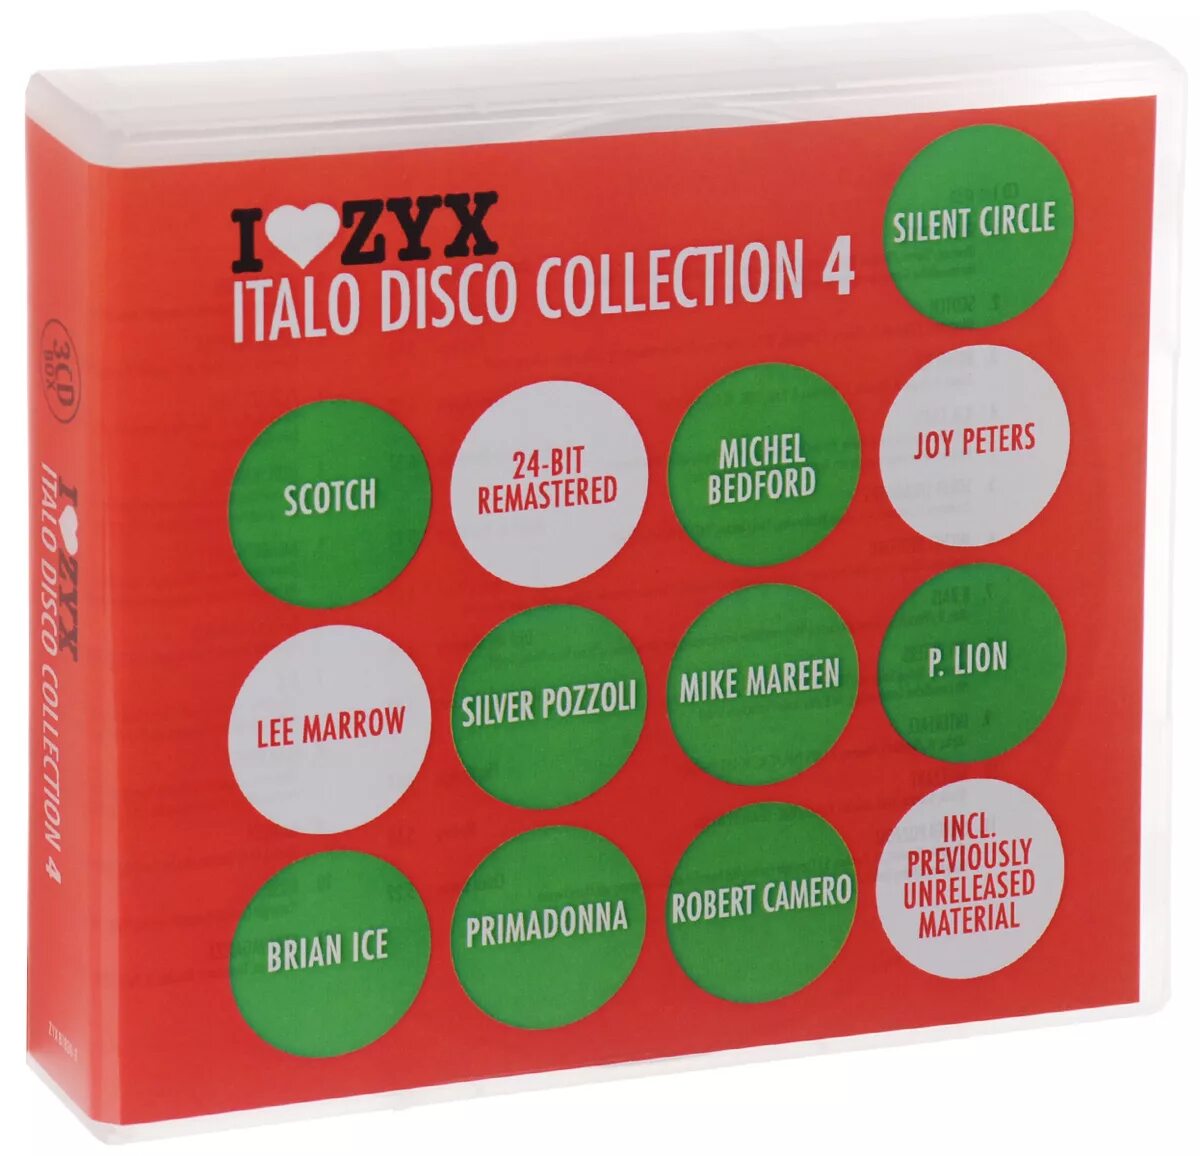 Disco collection. The best of Italo Disco. Сборник итальянской эстрады. Disco collection Monolit. Italo disco collection